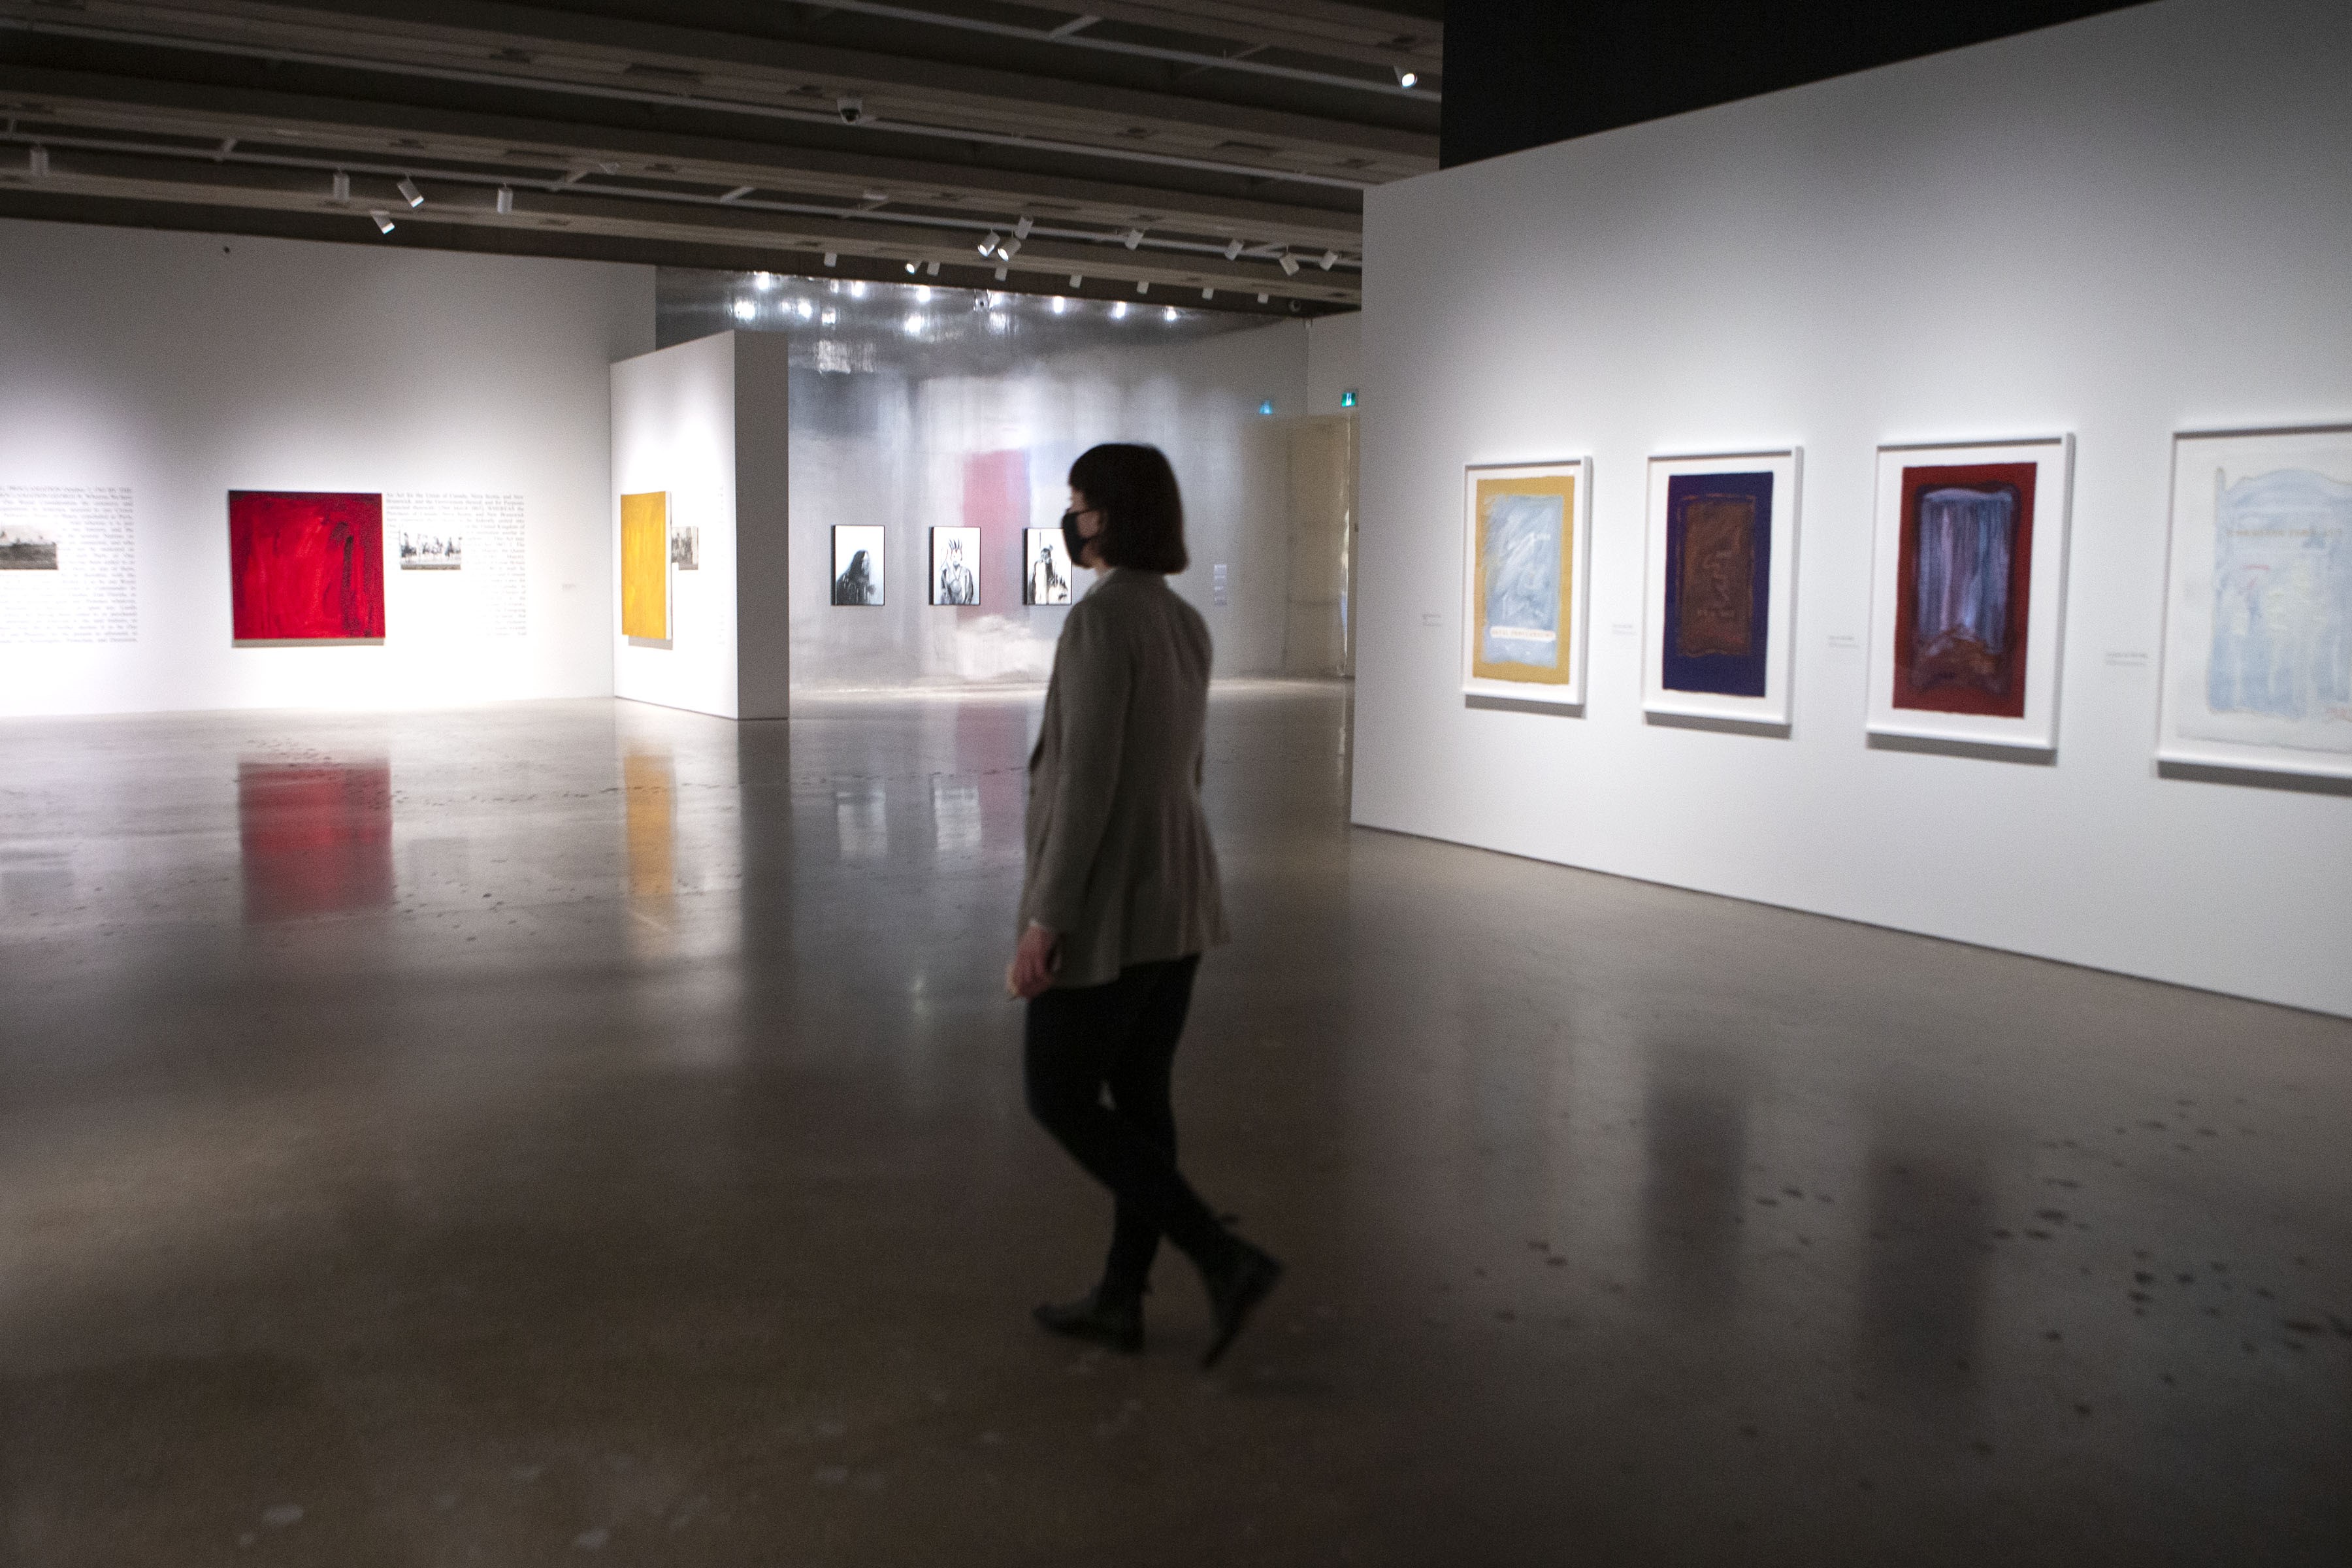 Art Gallery Of Ontario Annual Pass